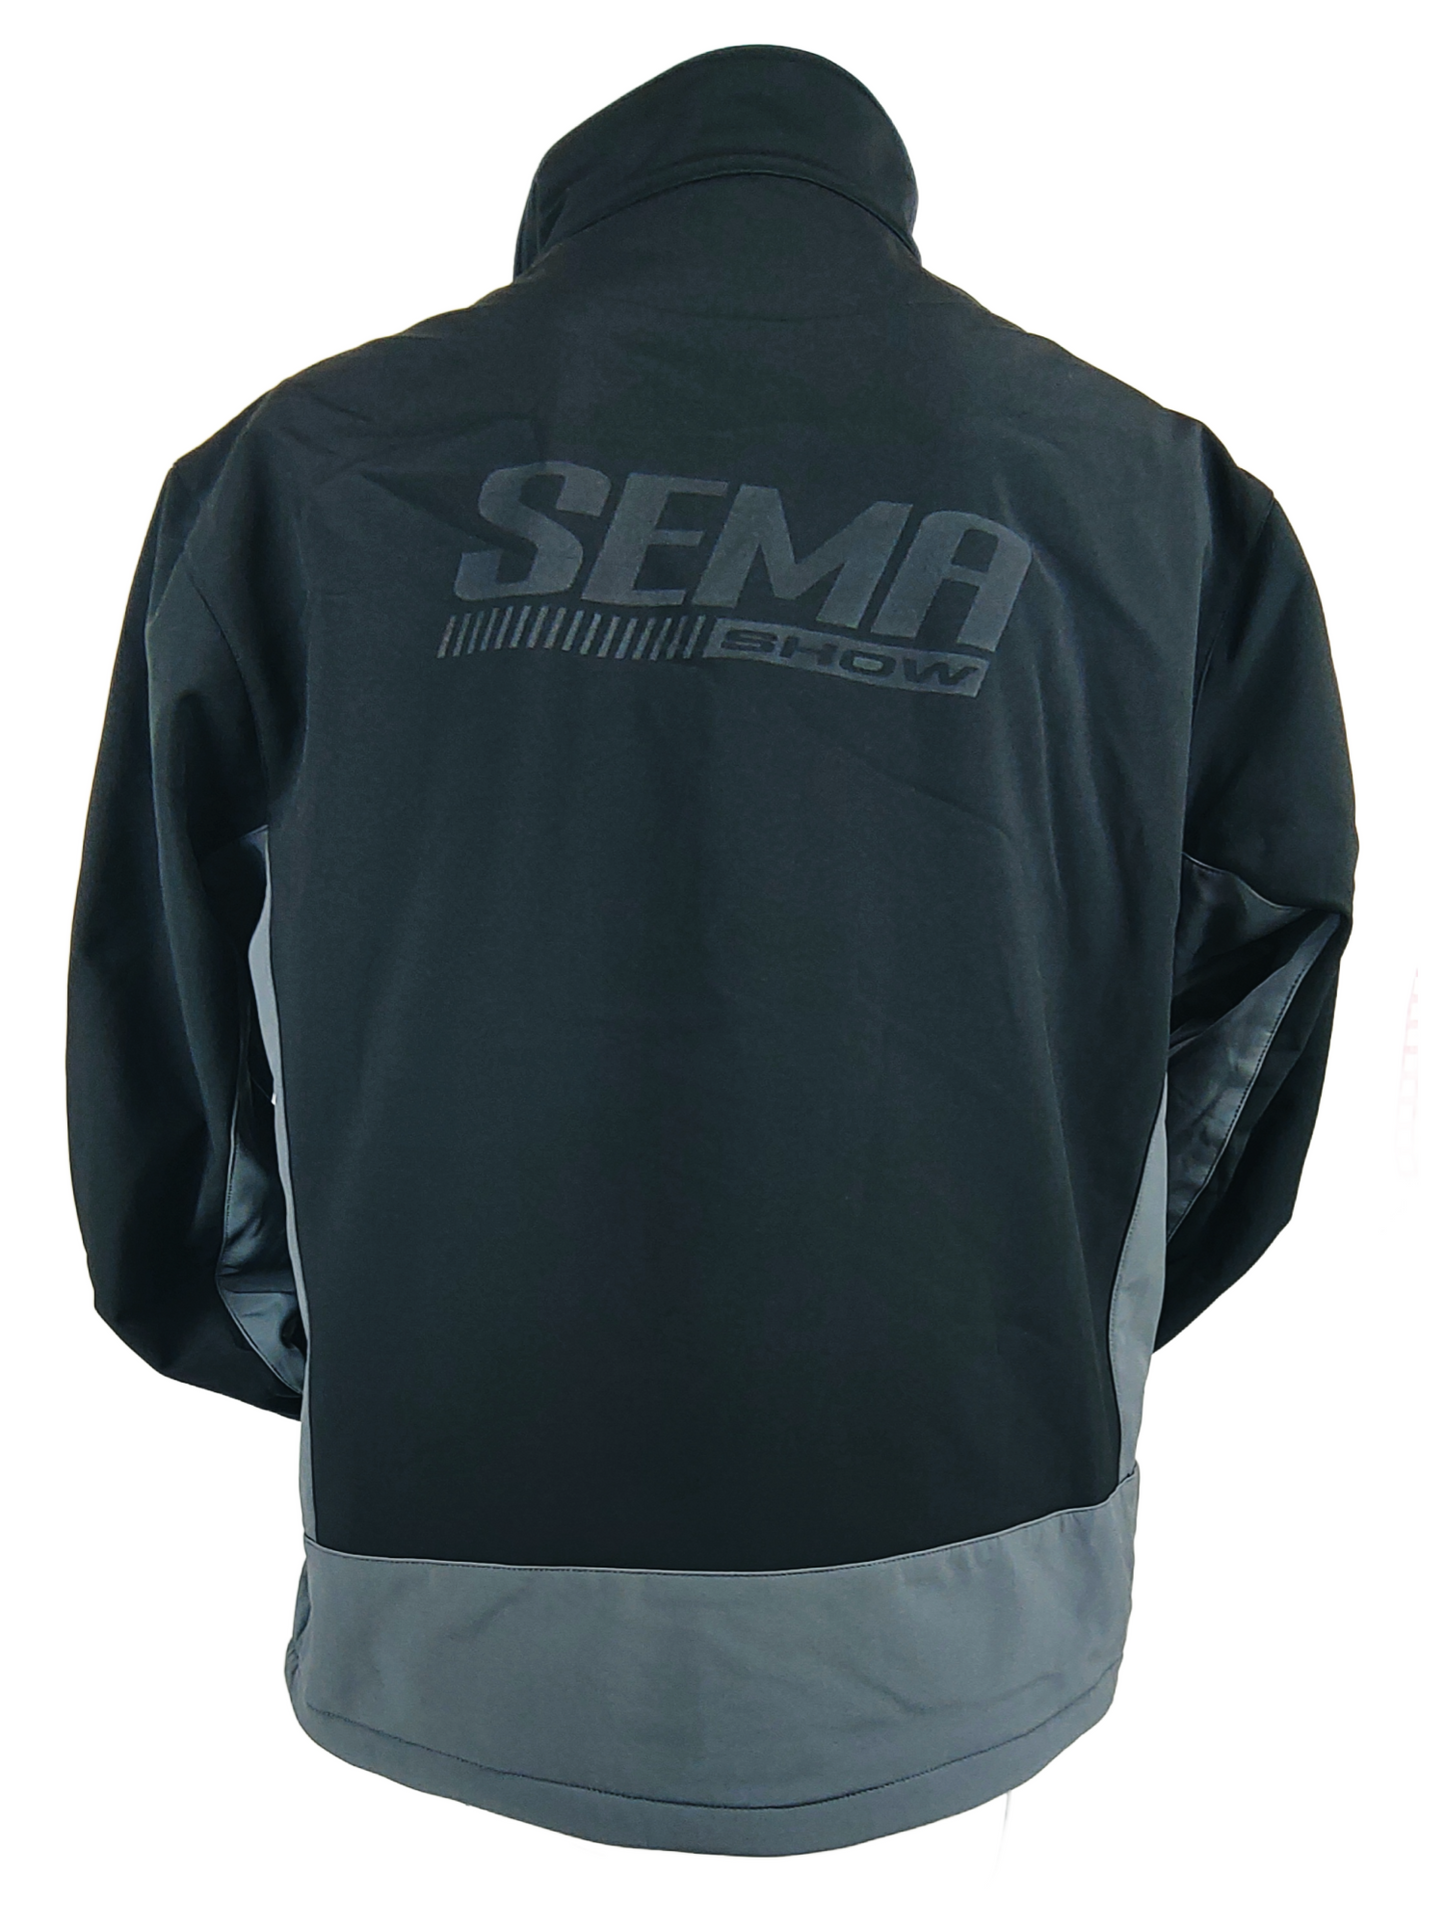 SEMA Show - 3 Layer Softshell Jacket with Bonded Fleece Lining - Black/Grey